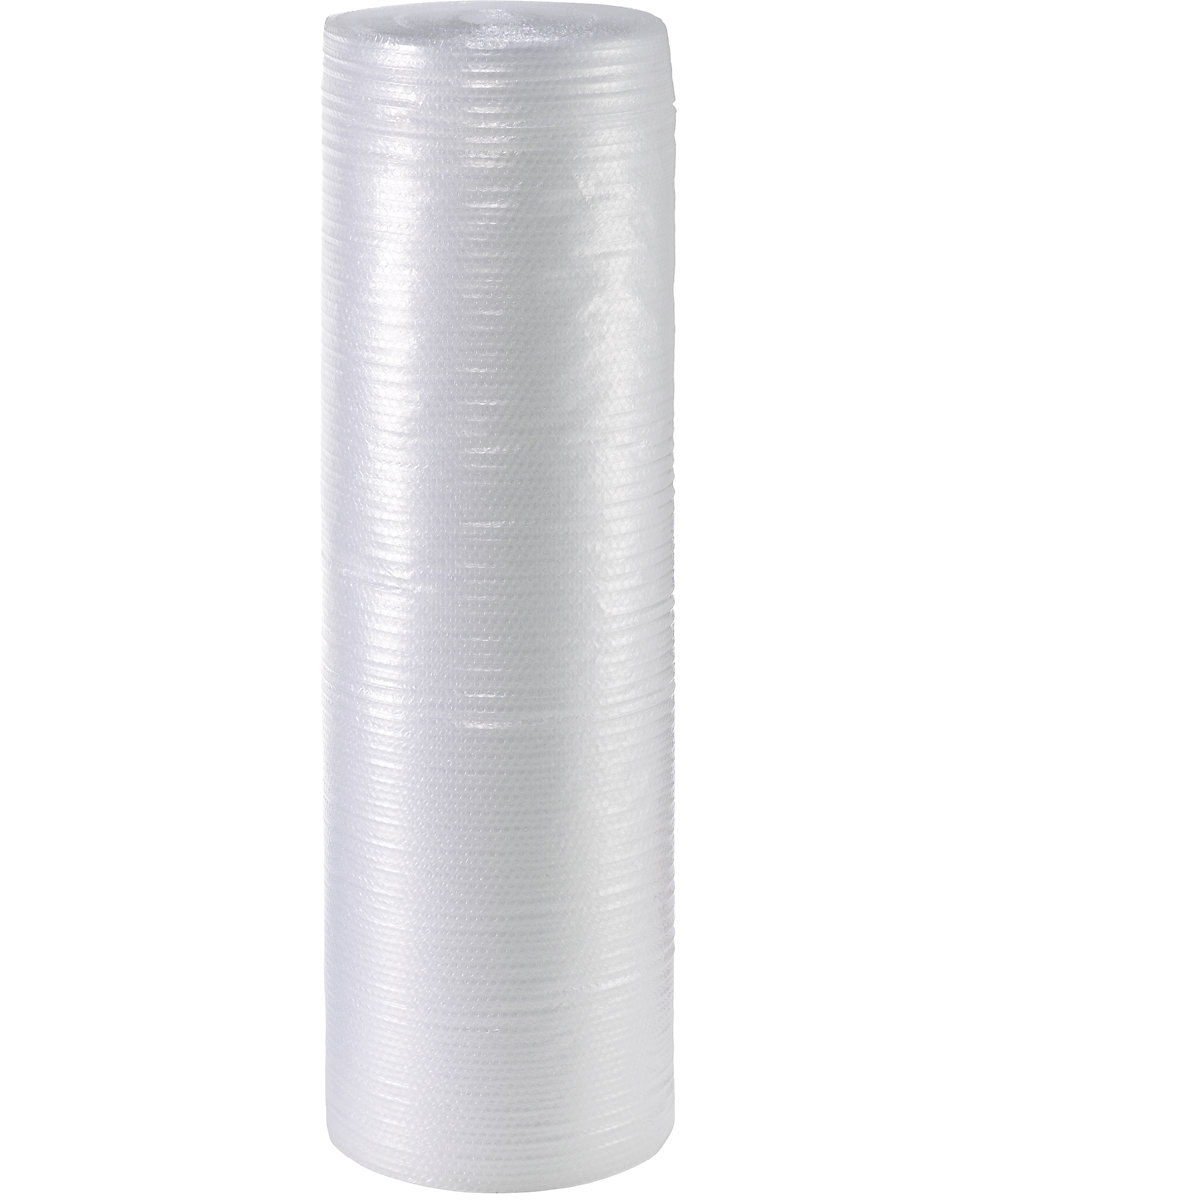 Bubble wrap film, 2-ply – eurokraft basic, film thickness 50 µm, width 1500 mm-7